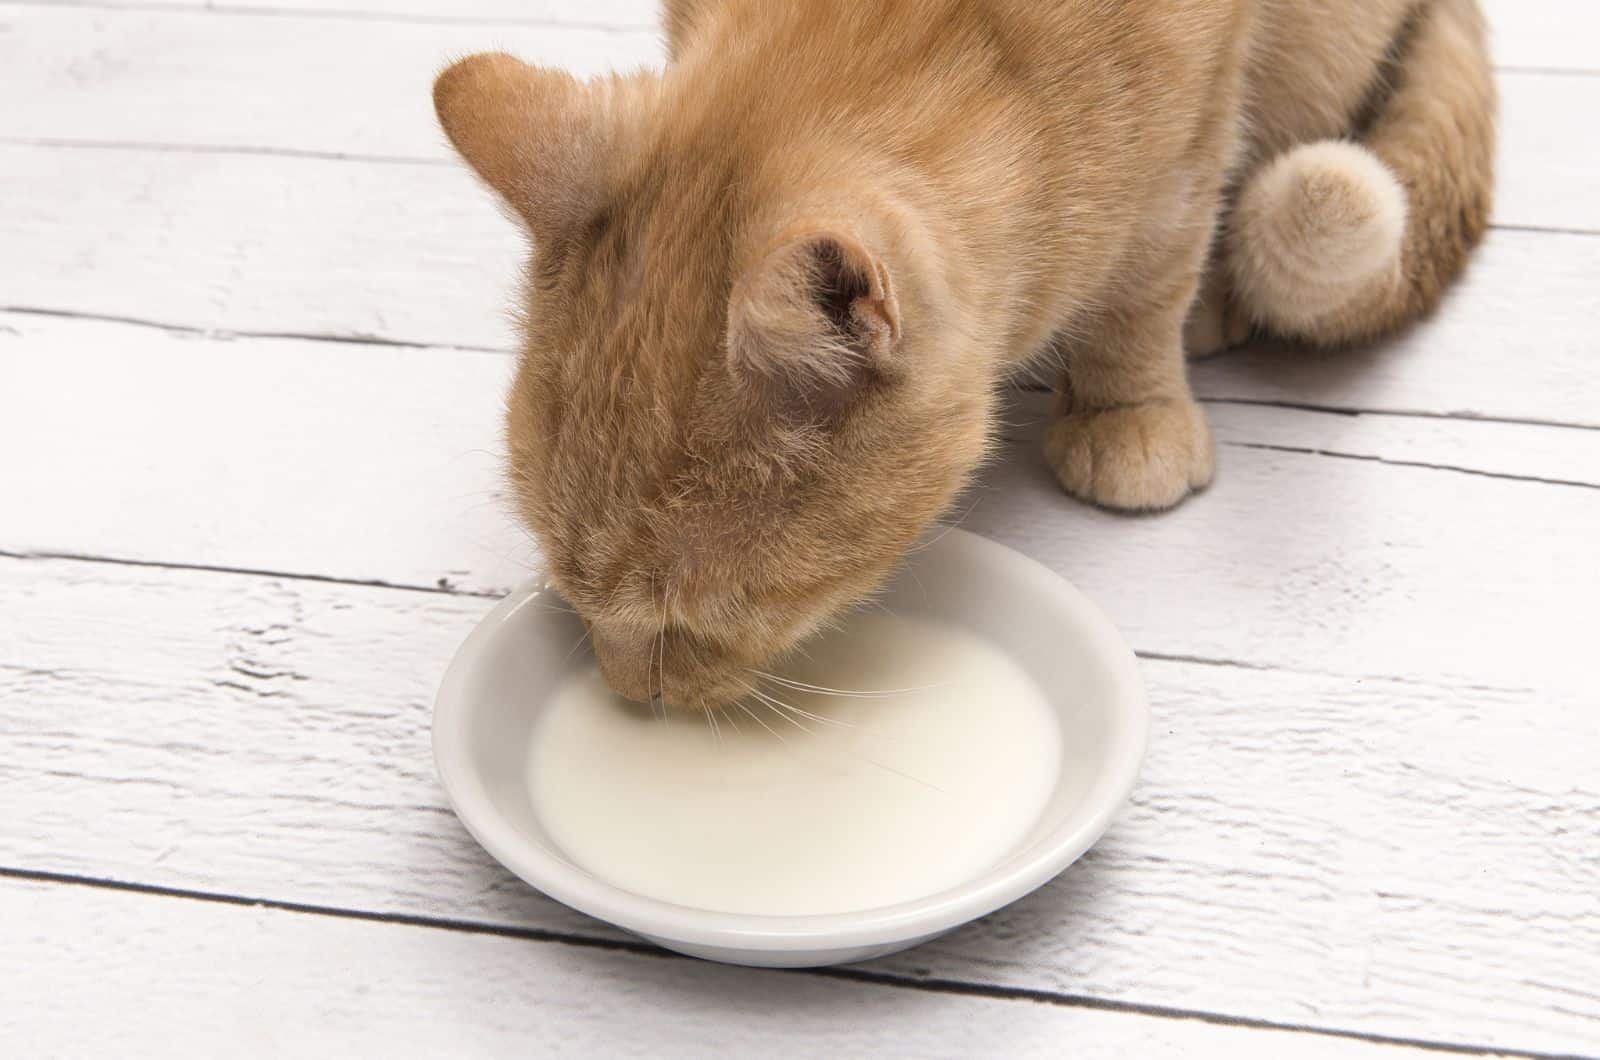 ginger cat drinking milk